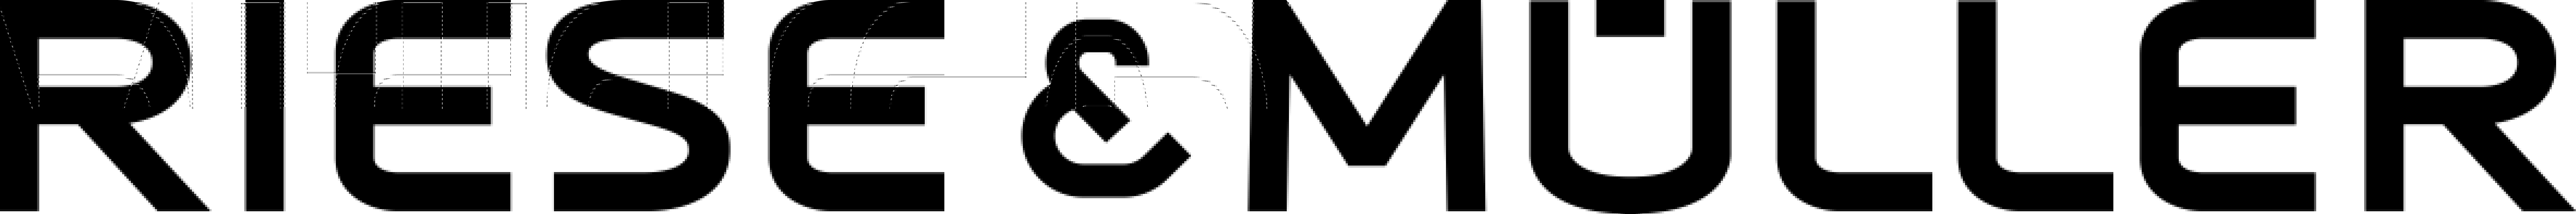 rm-logo.jpg